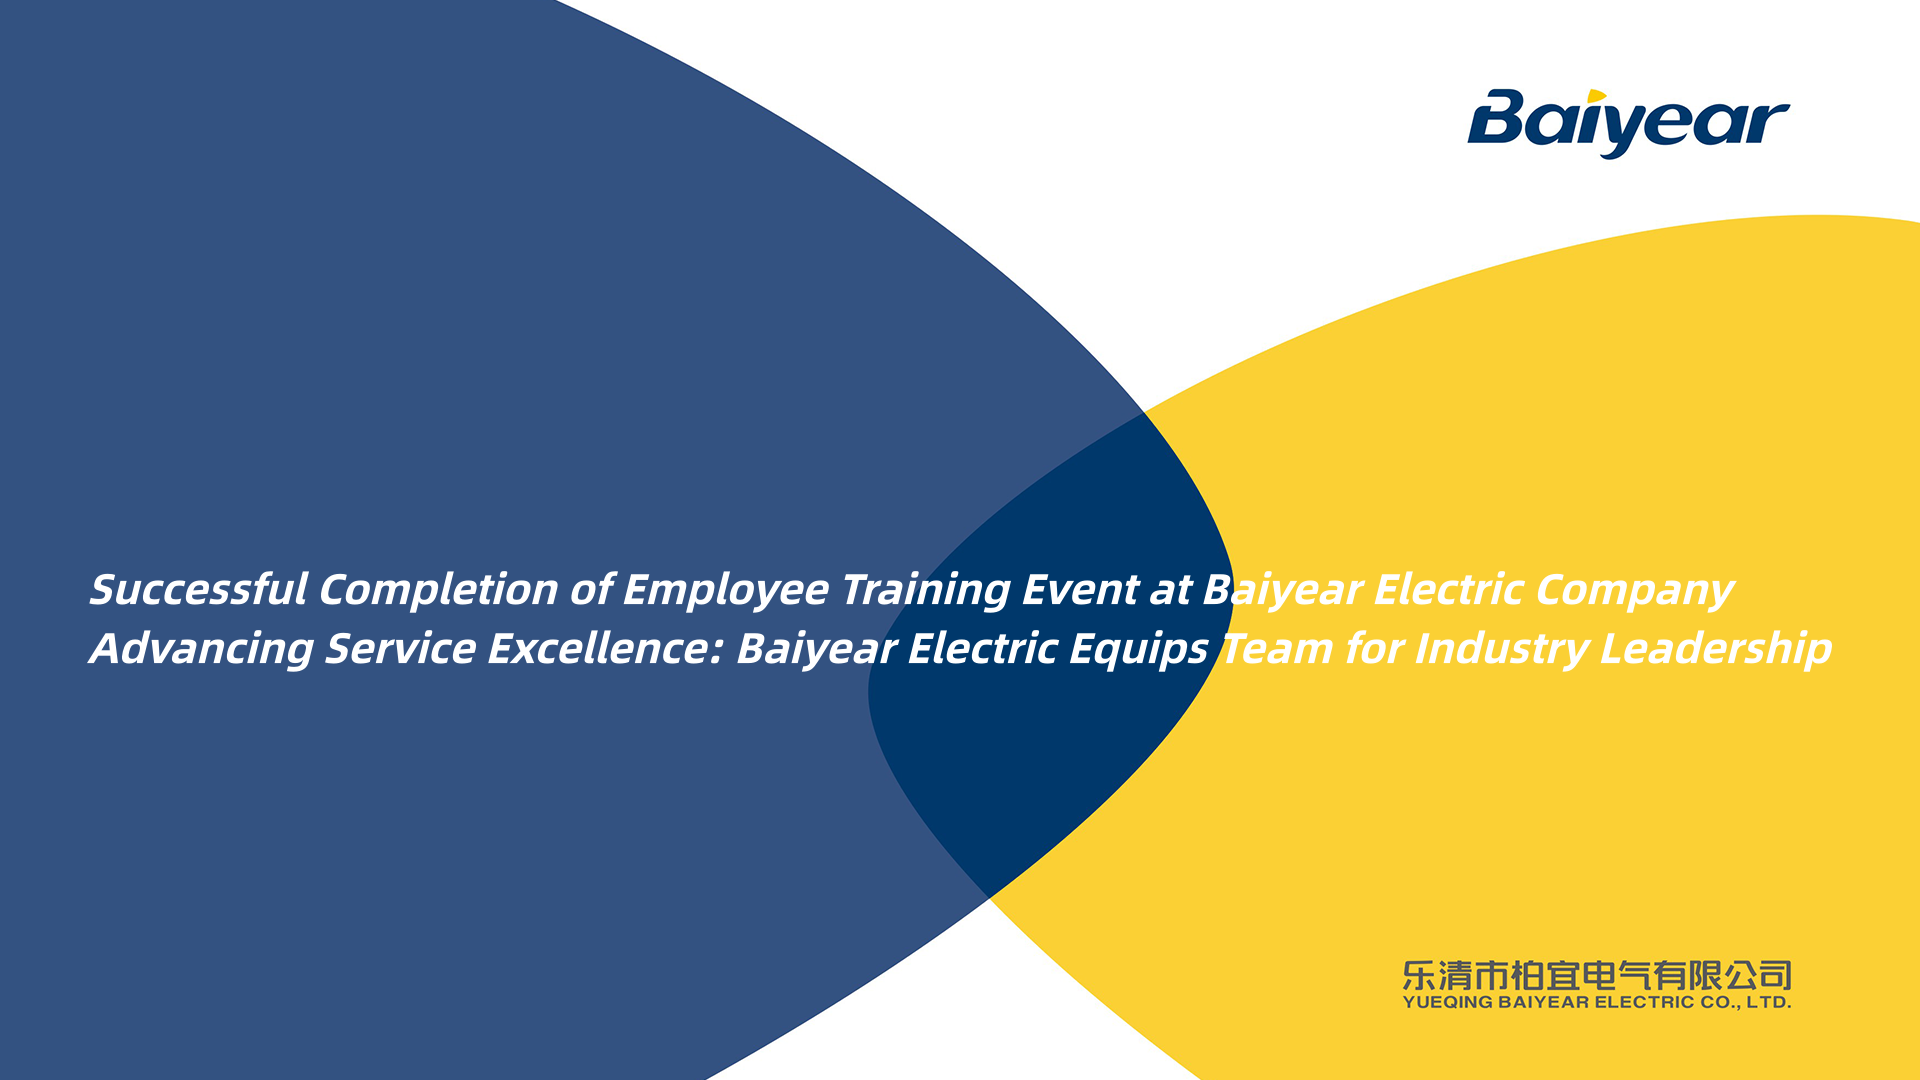 Súksesfol foltôging fan Employee Training Event by Baiyear Electric Company